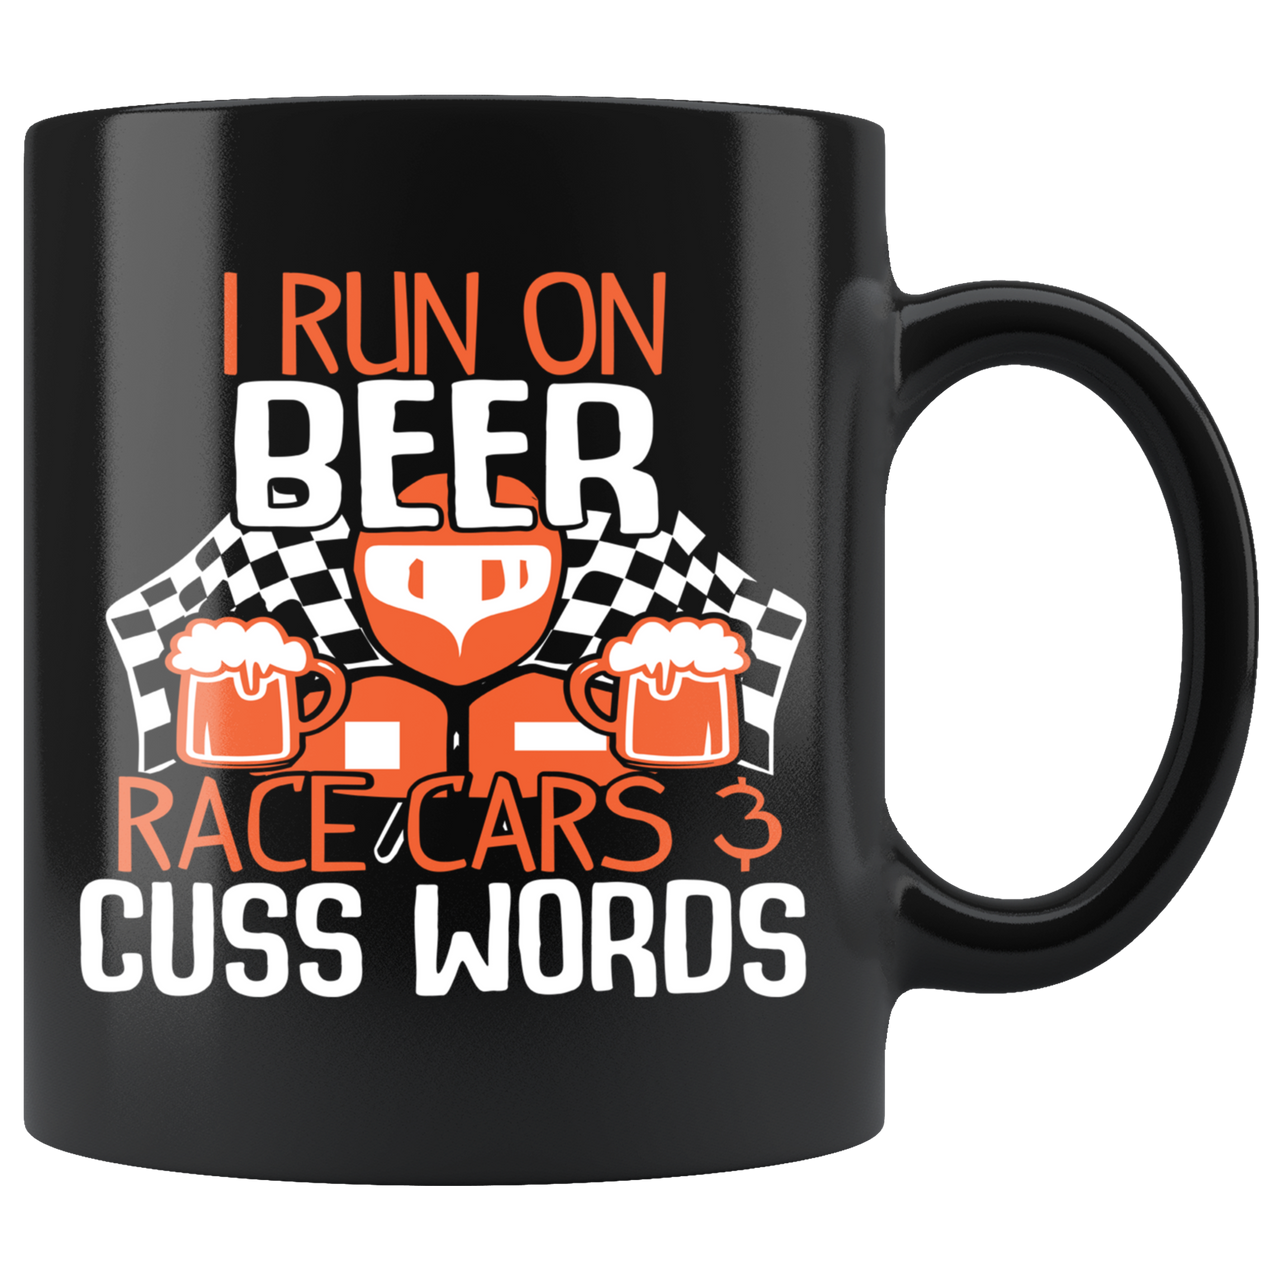 I Run On Beer Race Cars And Cuss Words Mug!